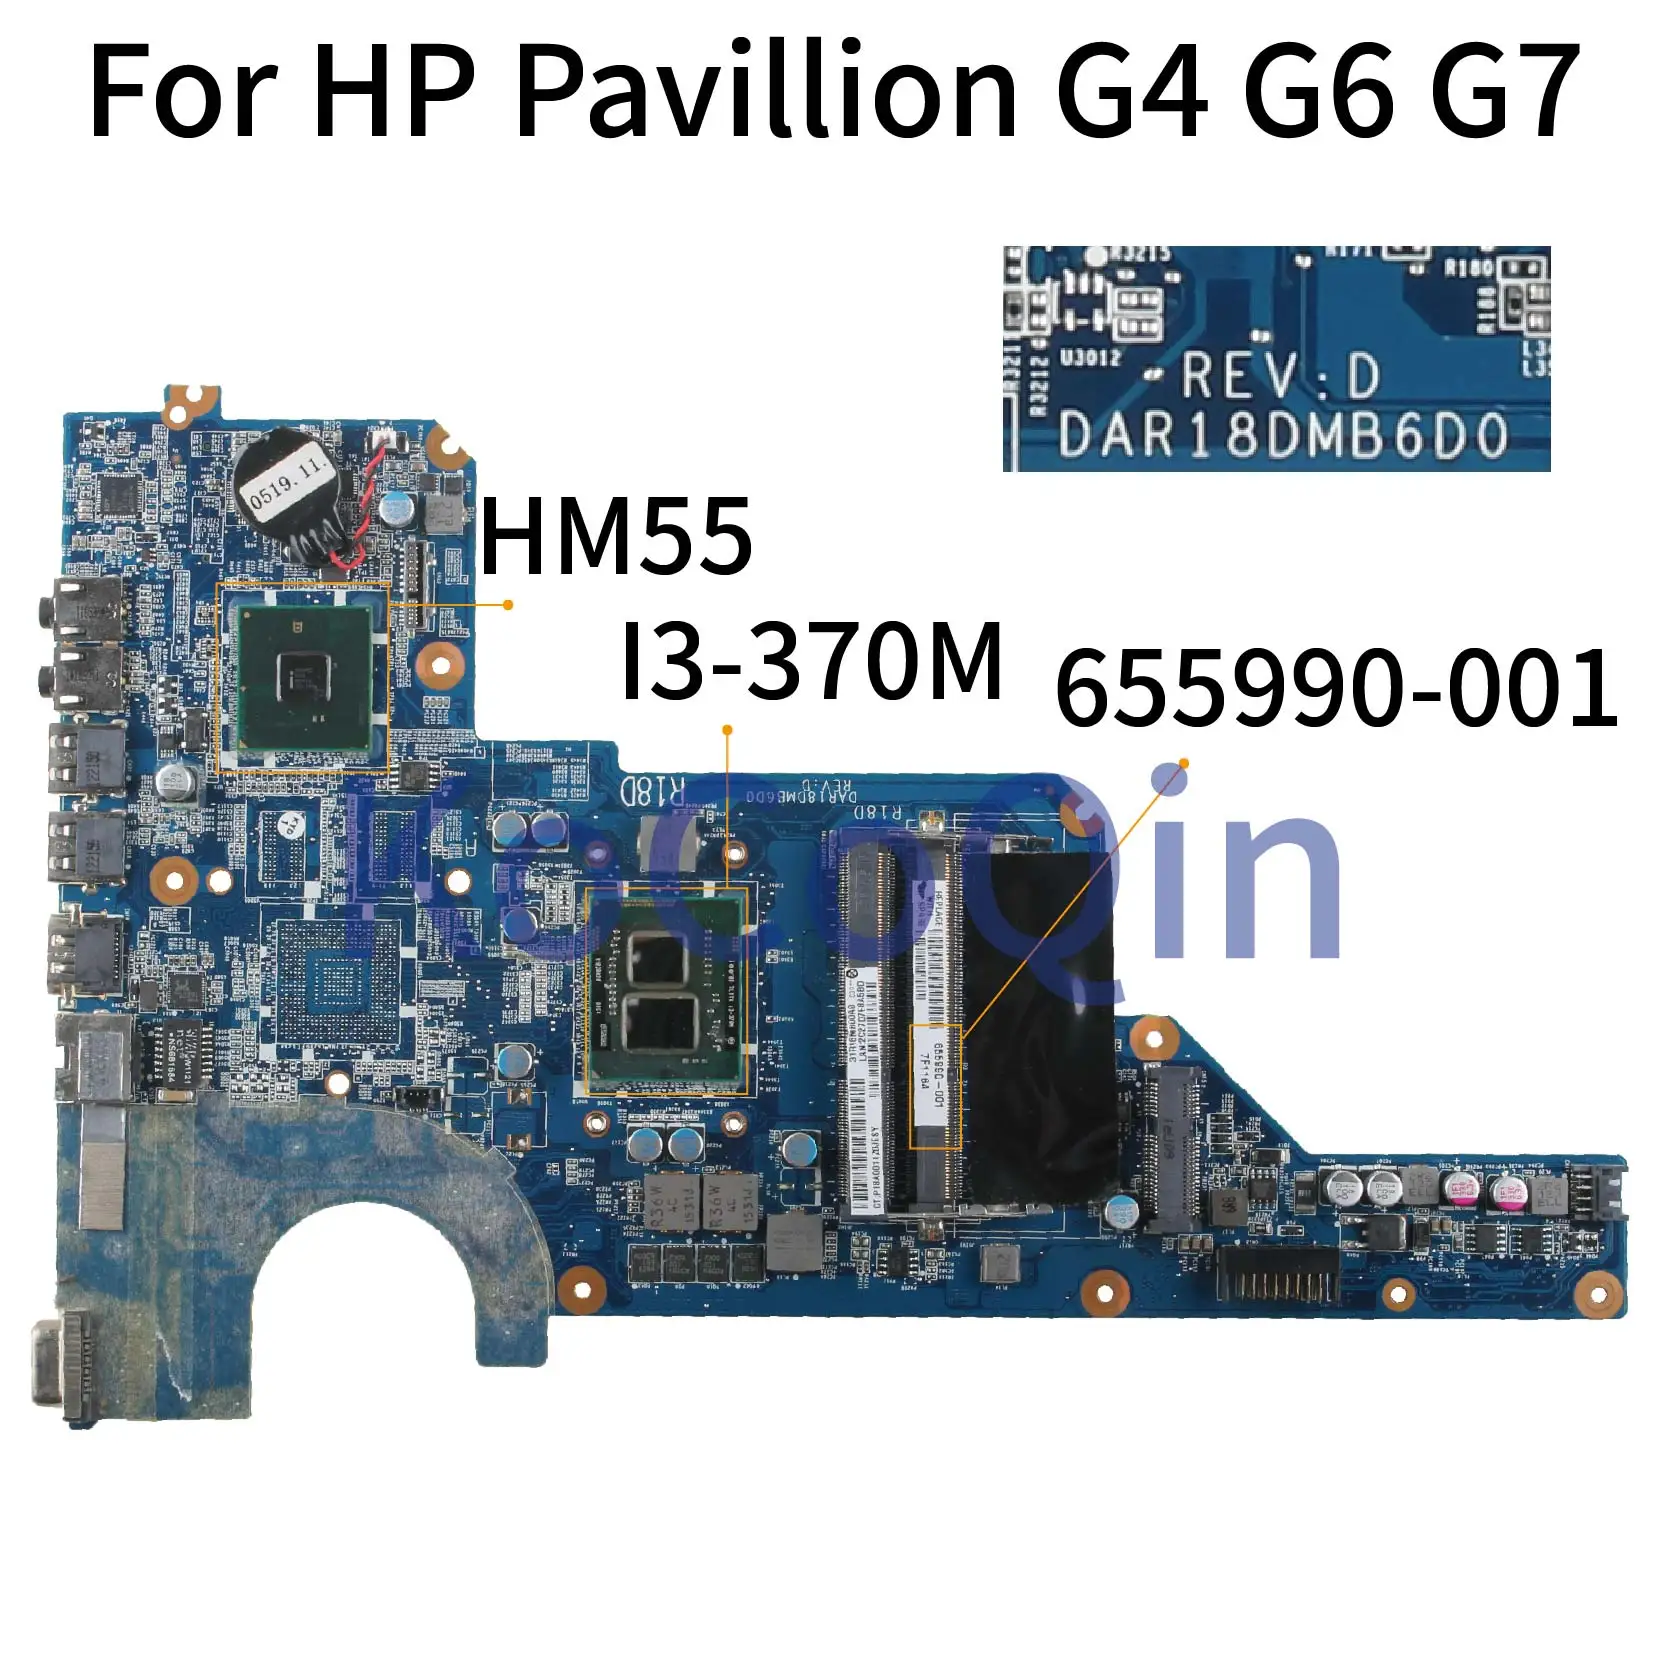 KoCoQin klēpjdators Mātesplatē HP Pavilion G4, G6 G7 G4-1000 G6-1000 I3-370M (Mainboard) 655990-001 655990-501 DAR18DM86D0 HM55